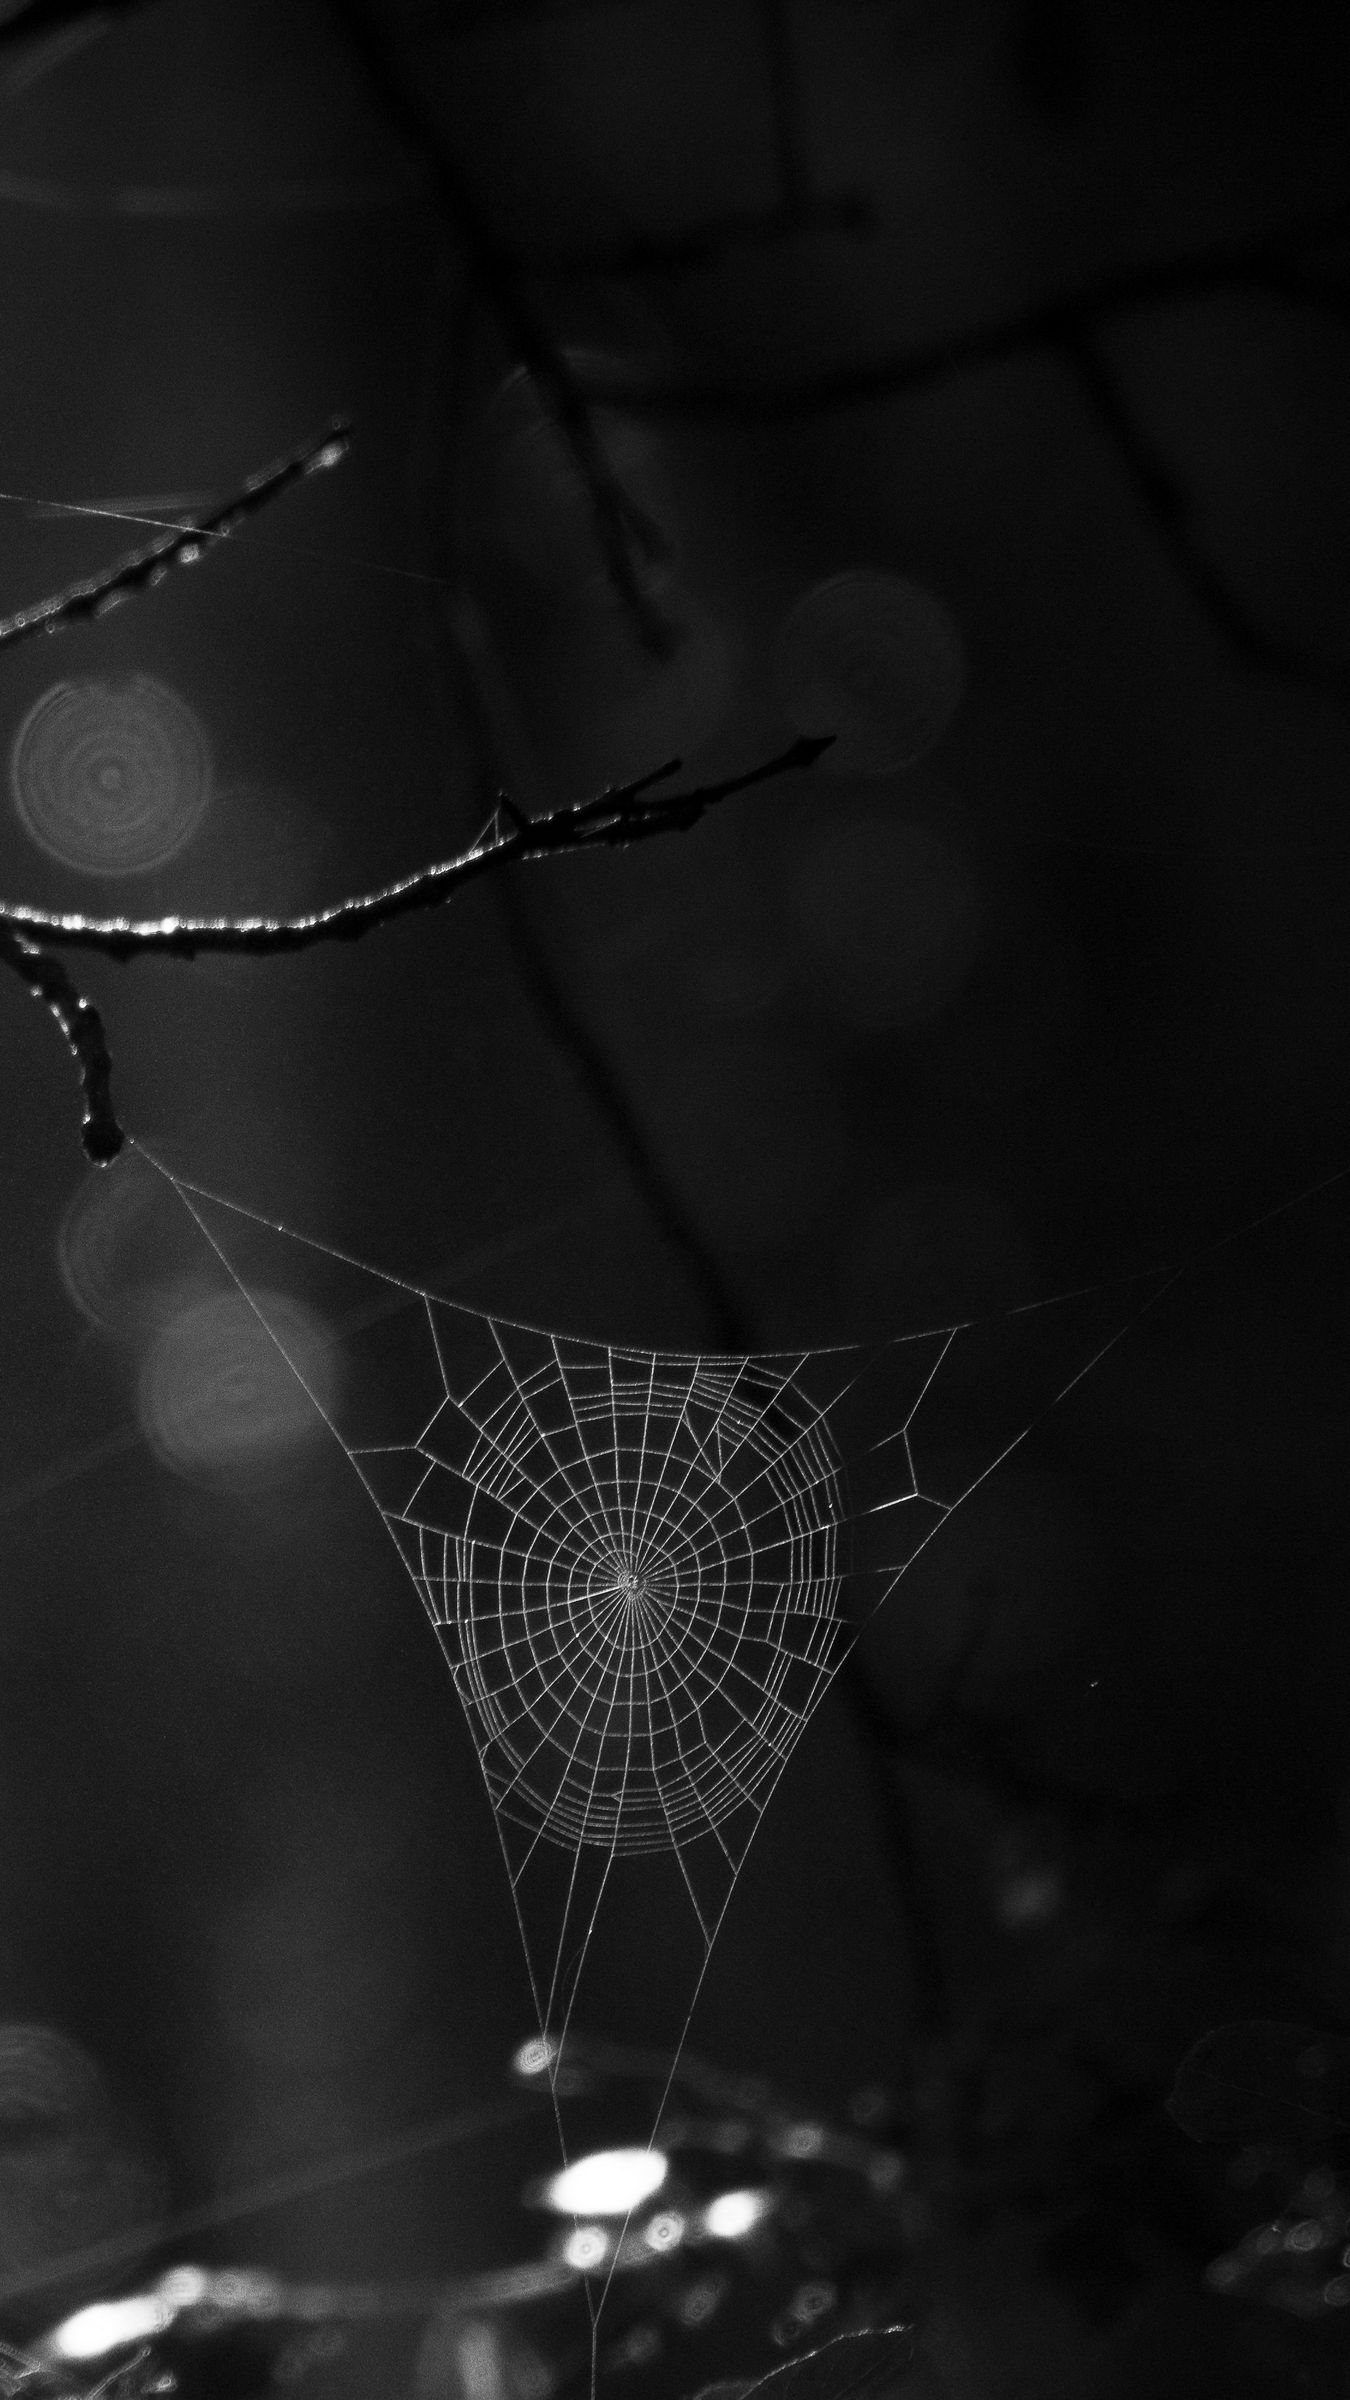 550809 1920x1080 fly spider man web of shadows wallpaper JPG 79 kB - Rare  Gallery HD Wallpapers